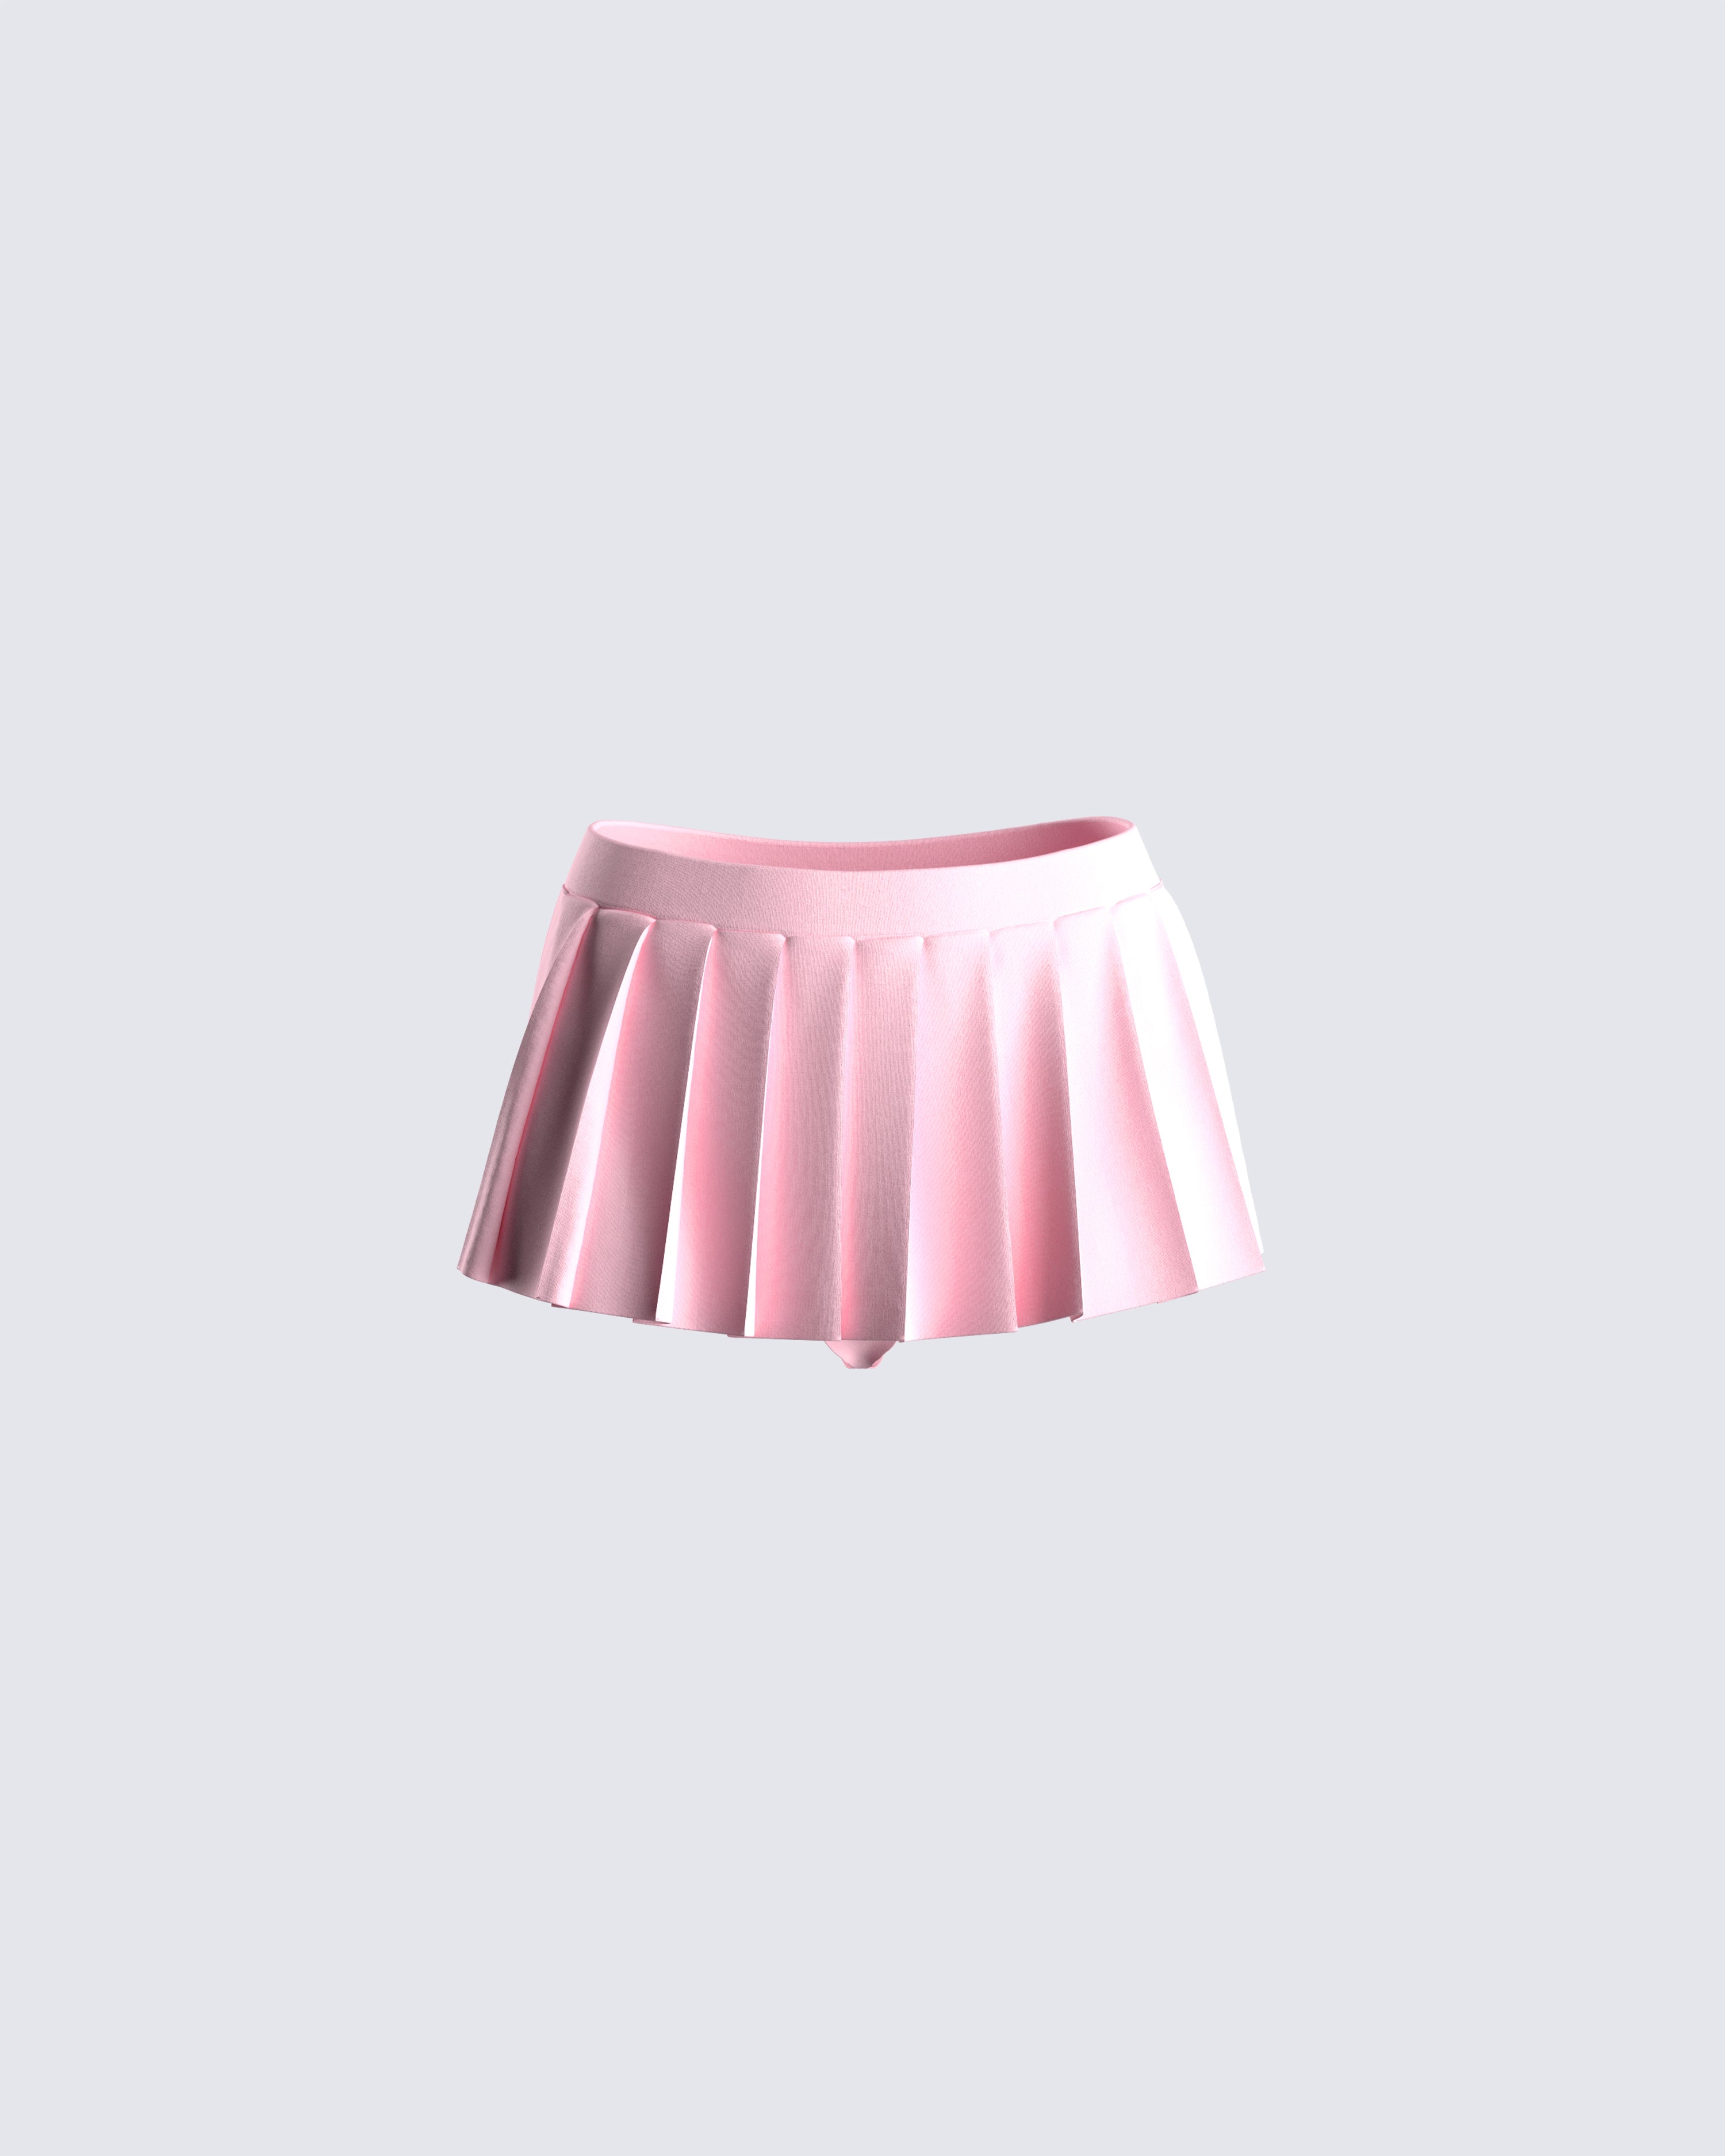 Micro Mini Skirt in Semi Sheer Pink Satin Stripe and Mesh